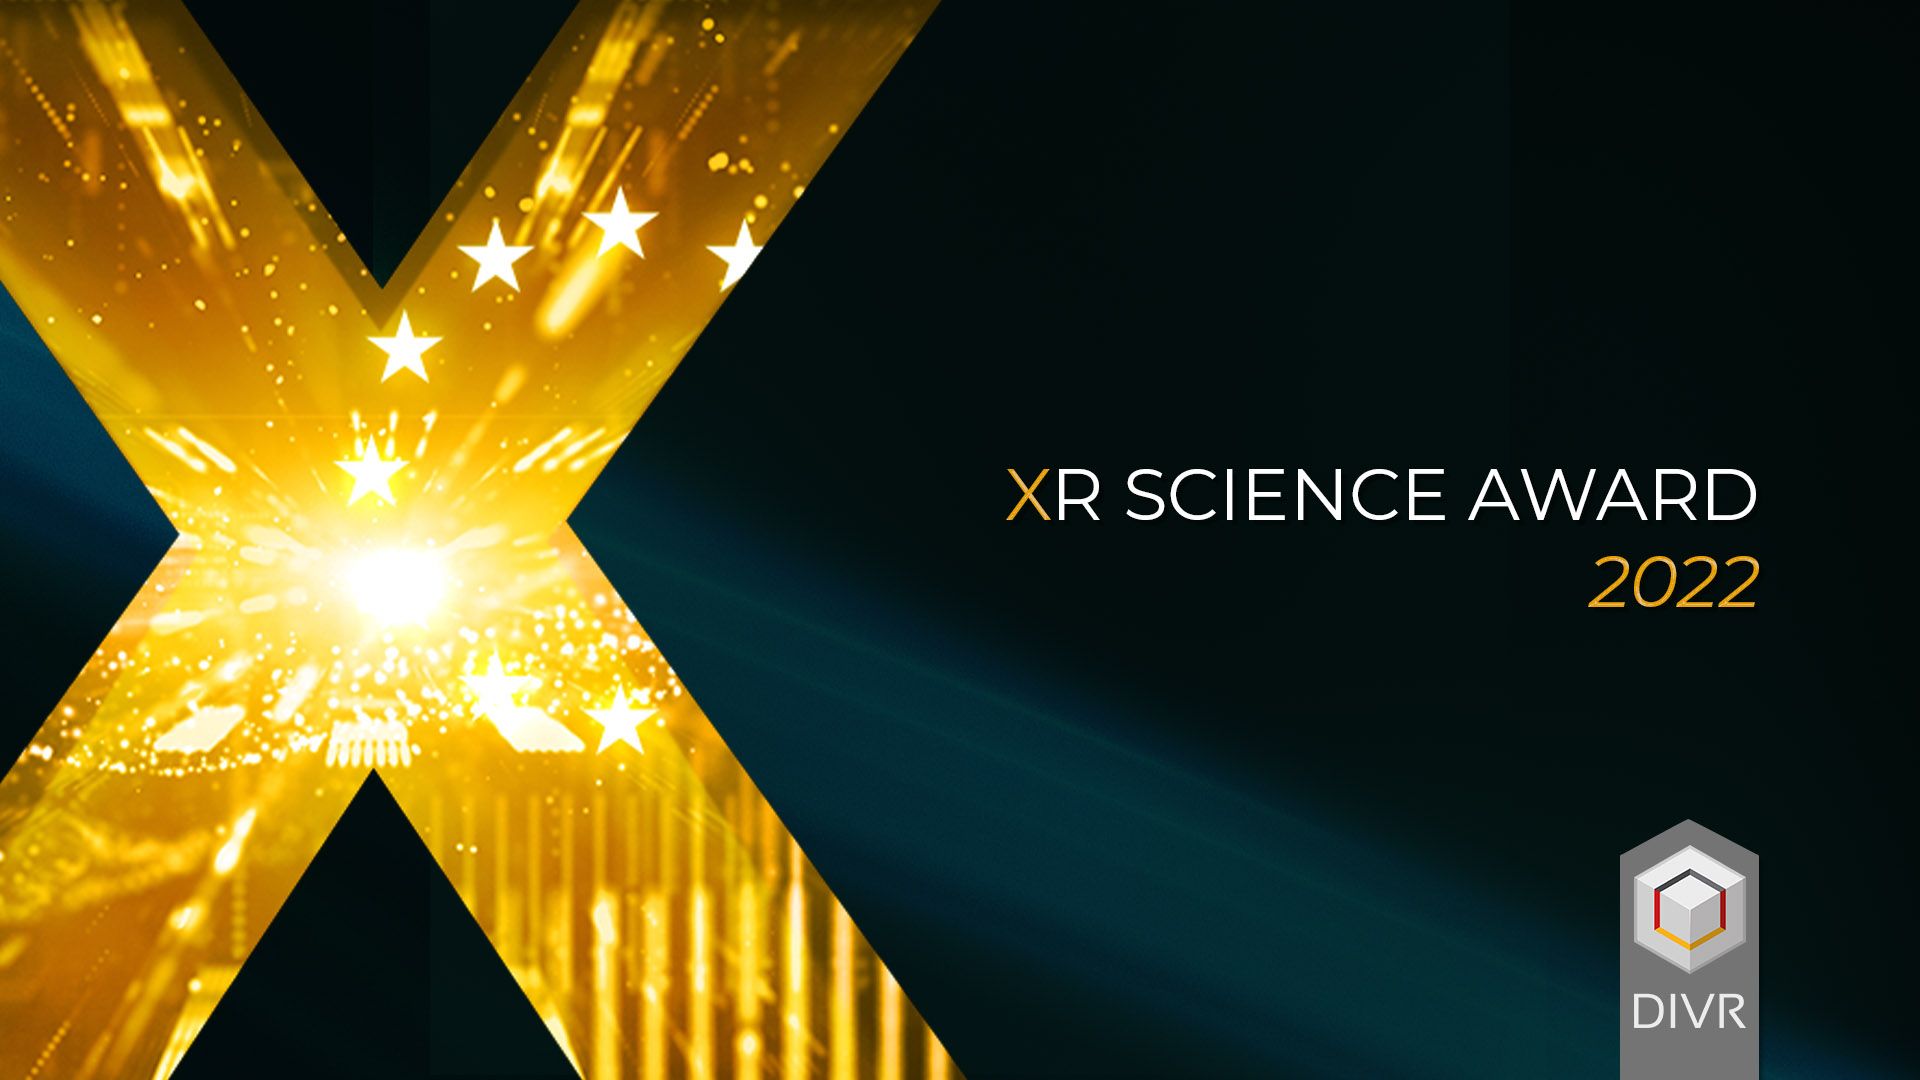 XR Science Award 2022